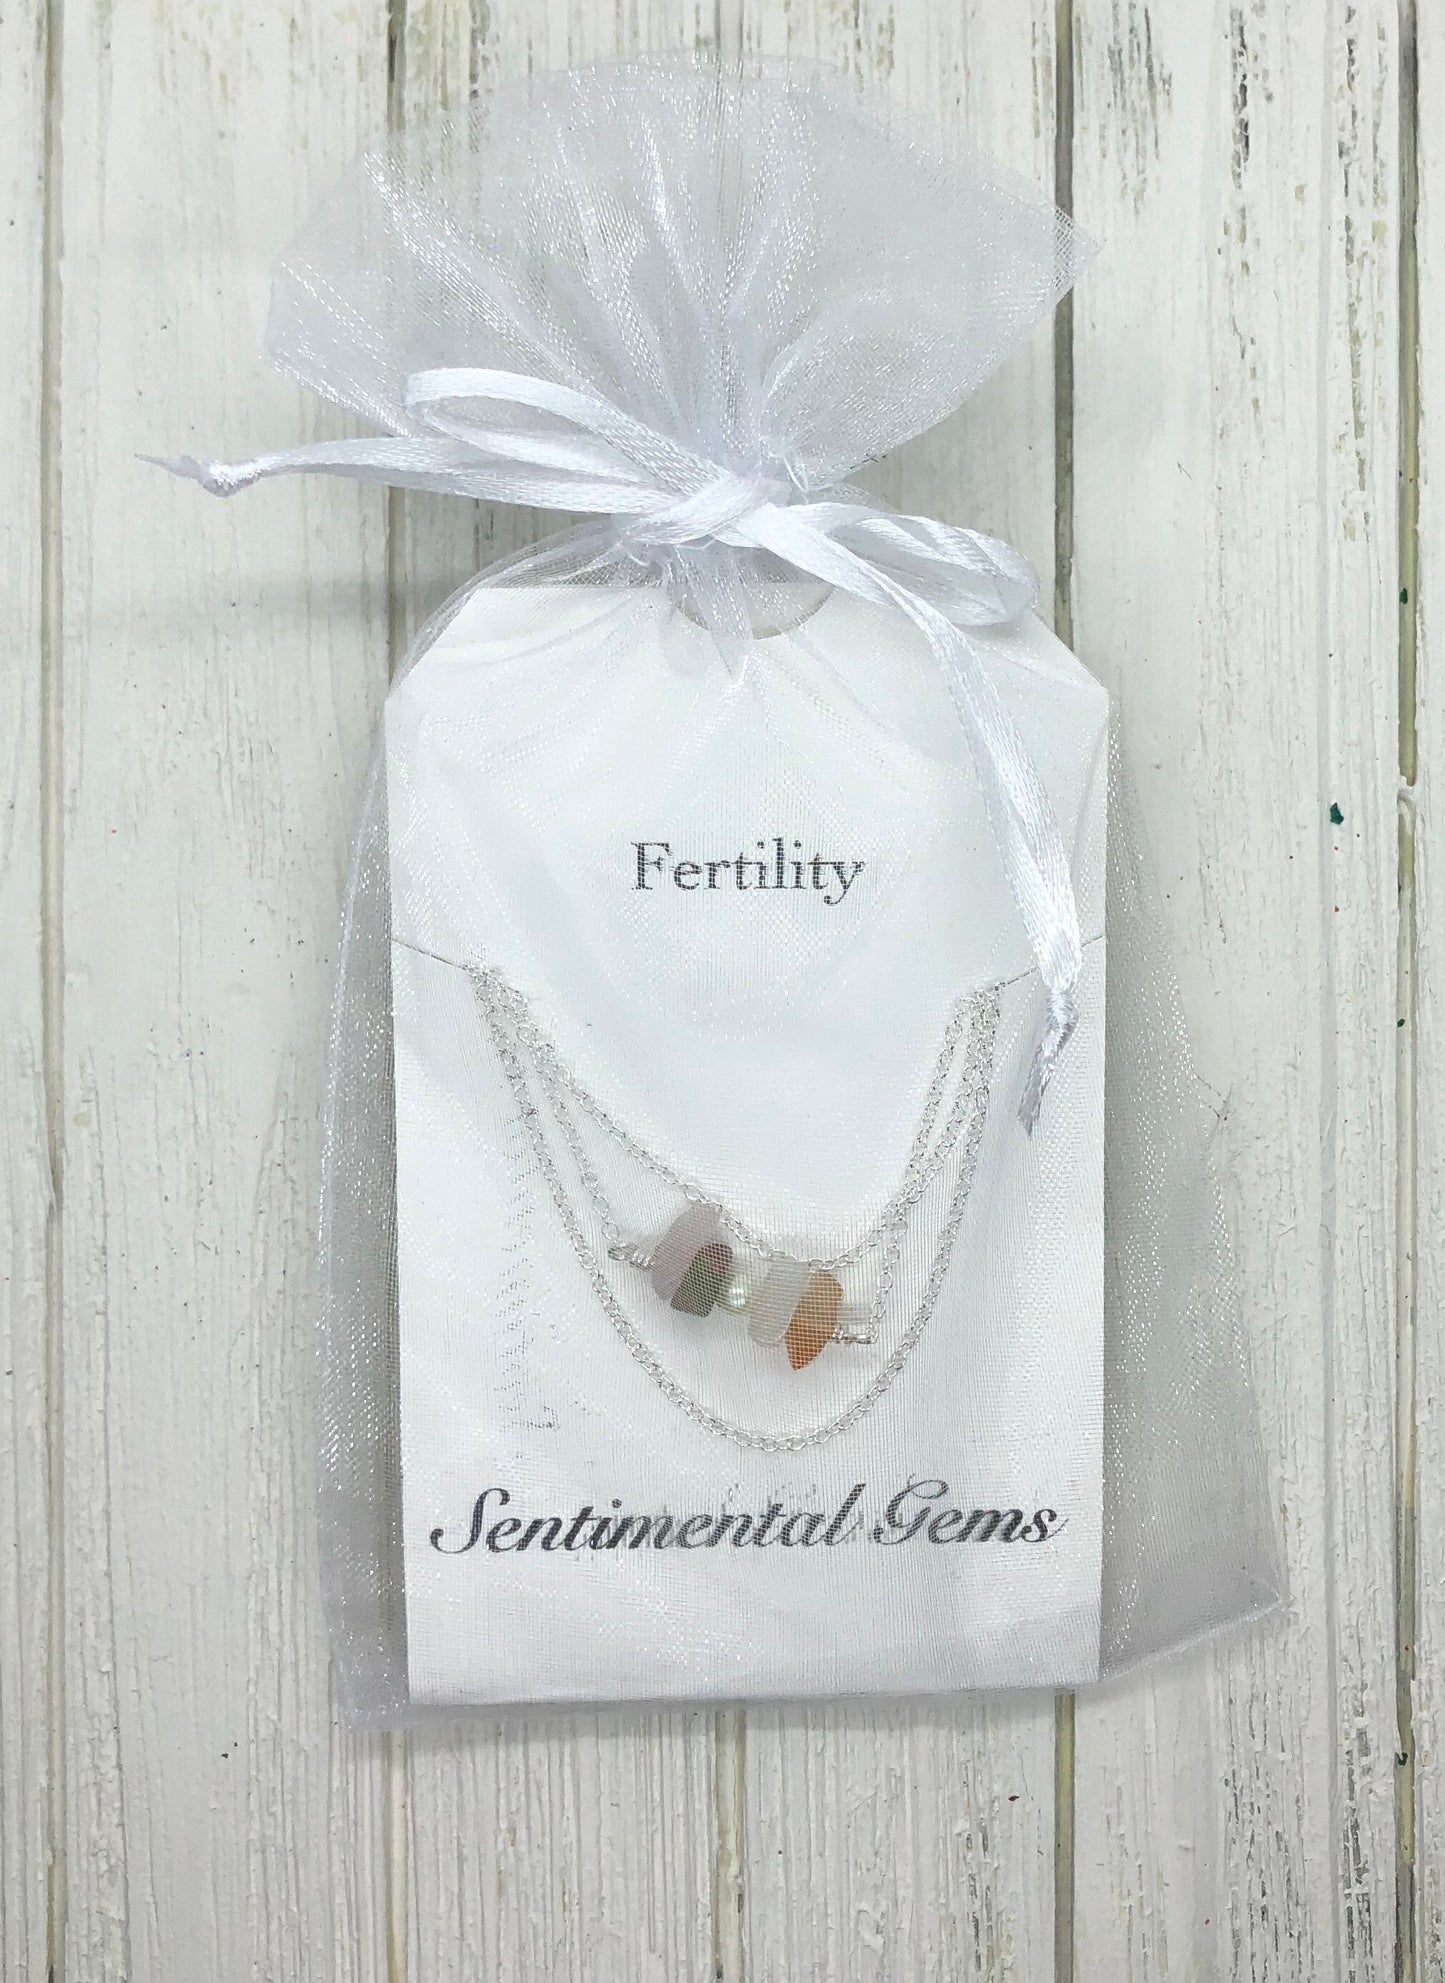 Sentimental Gems Fertility Crystals Collection